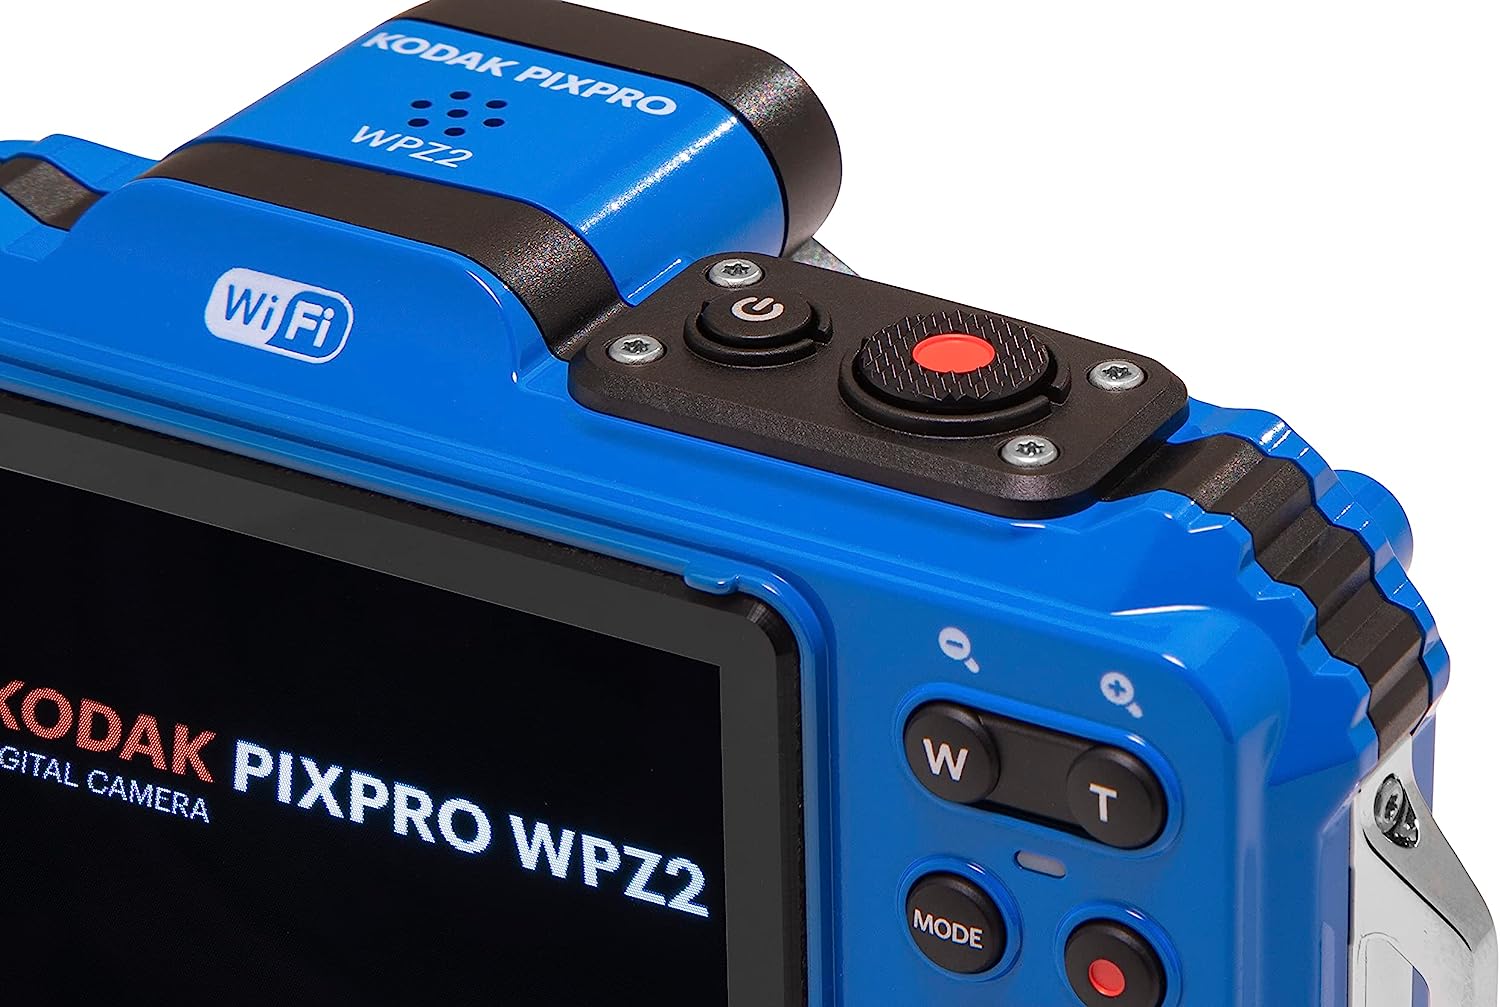 KODAK PIXPRO WPZ2 Rugged Waterproof Shockproof Dustproof WiFi Digital Camera 16MP 4X Optical Zoom 1080P Full HD Video Vlogging Camera 2.7